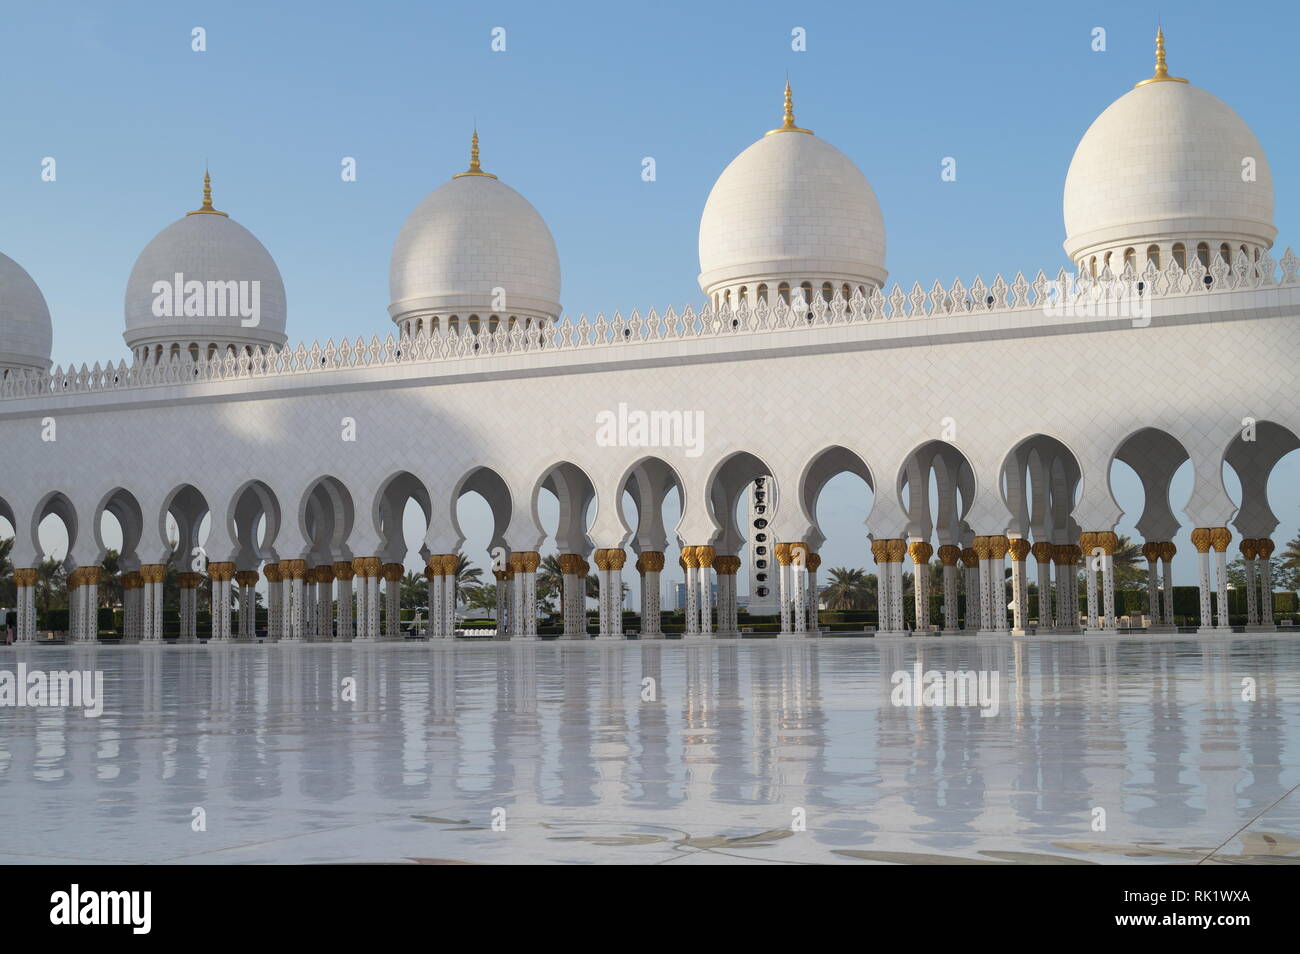 The Sheik Zayed Grand Mosque - Abu Dhabi Stock Photo